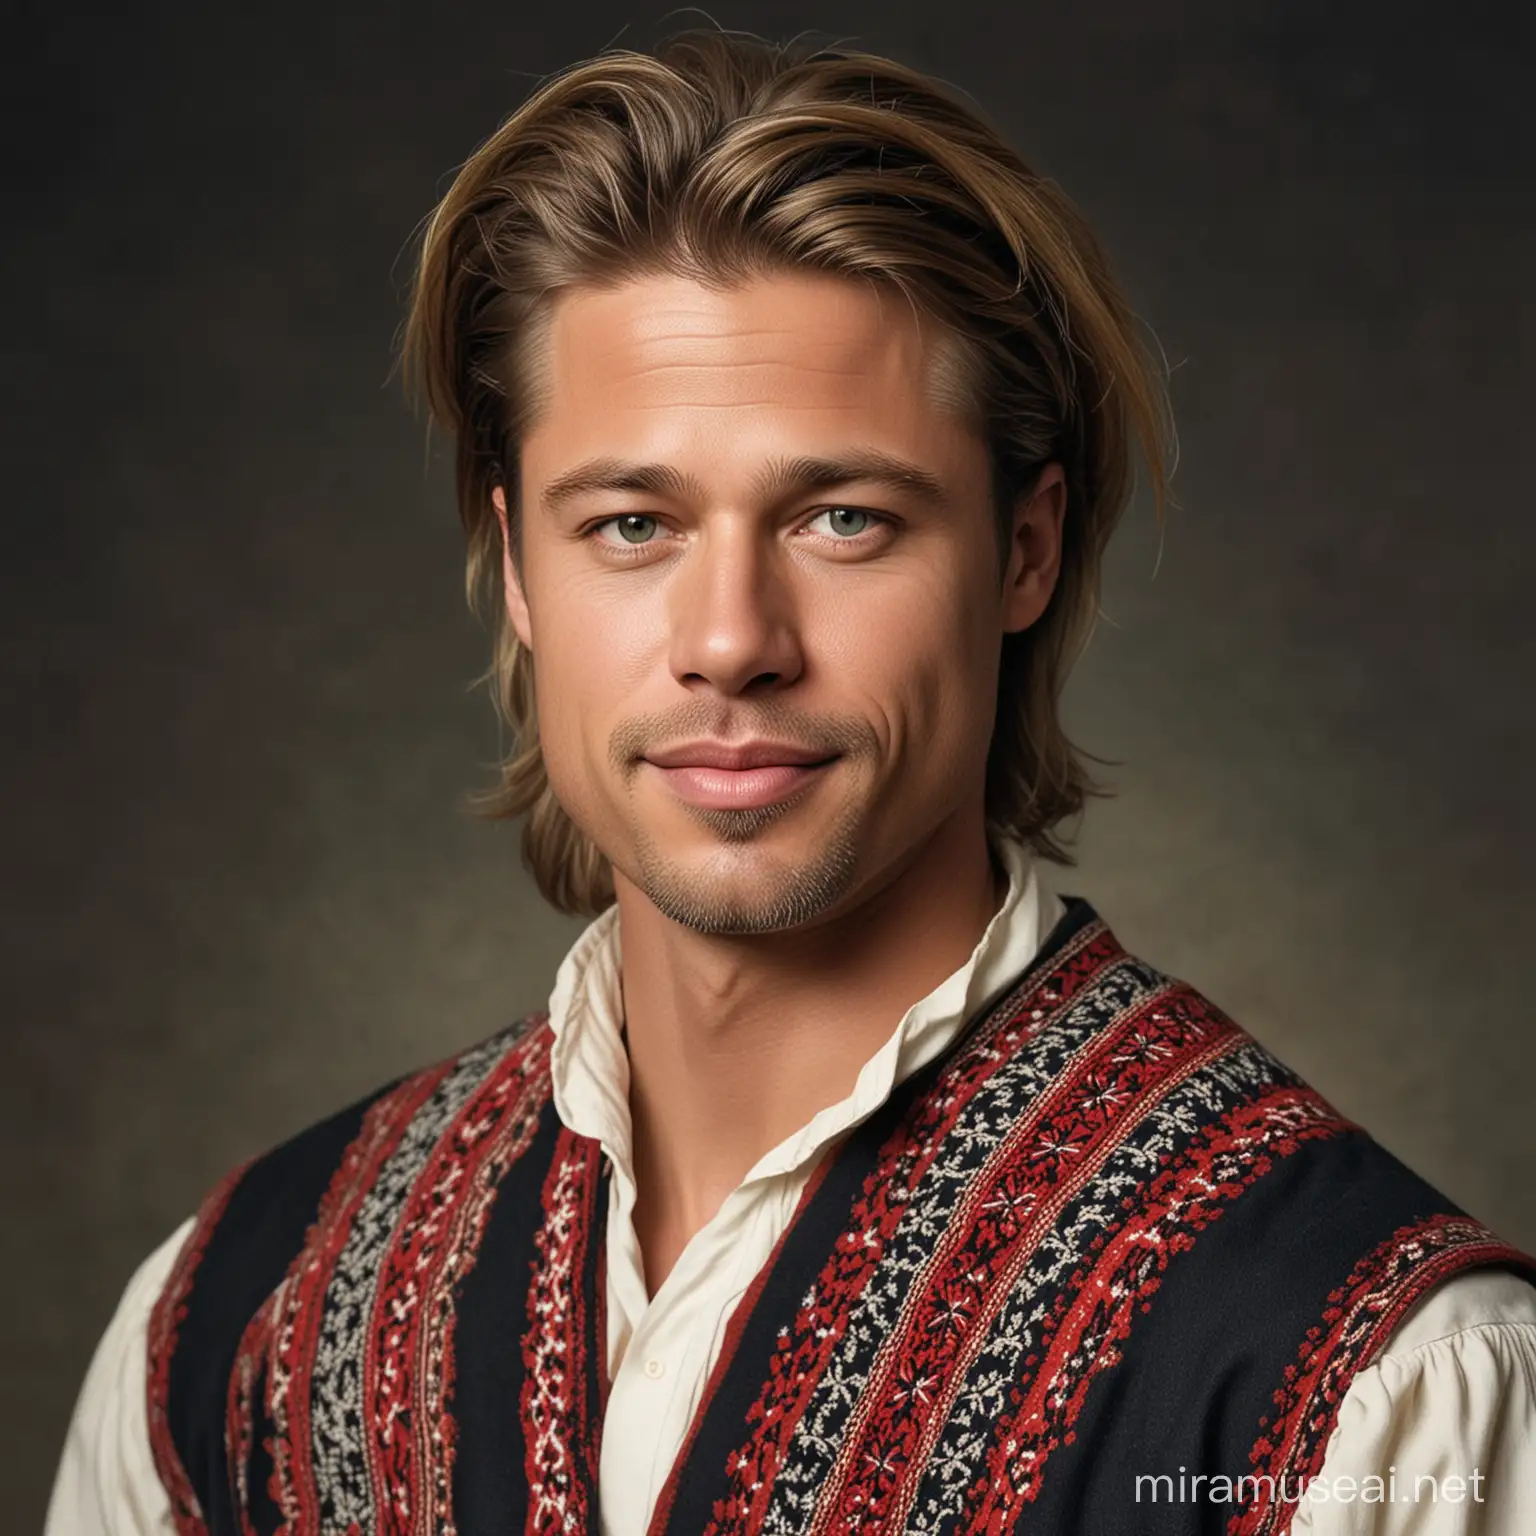 Traditional Norwegian Clothing Brad Pitt Lookalike in his 30s